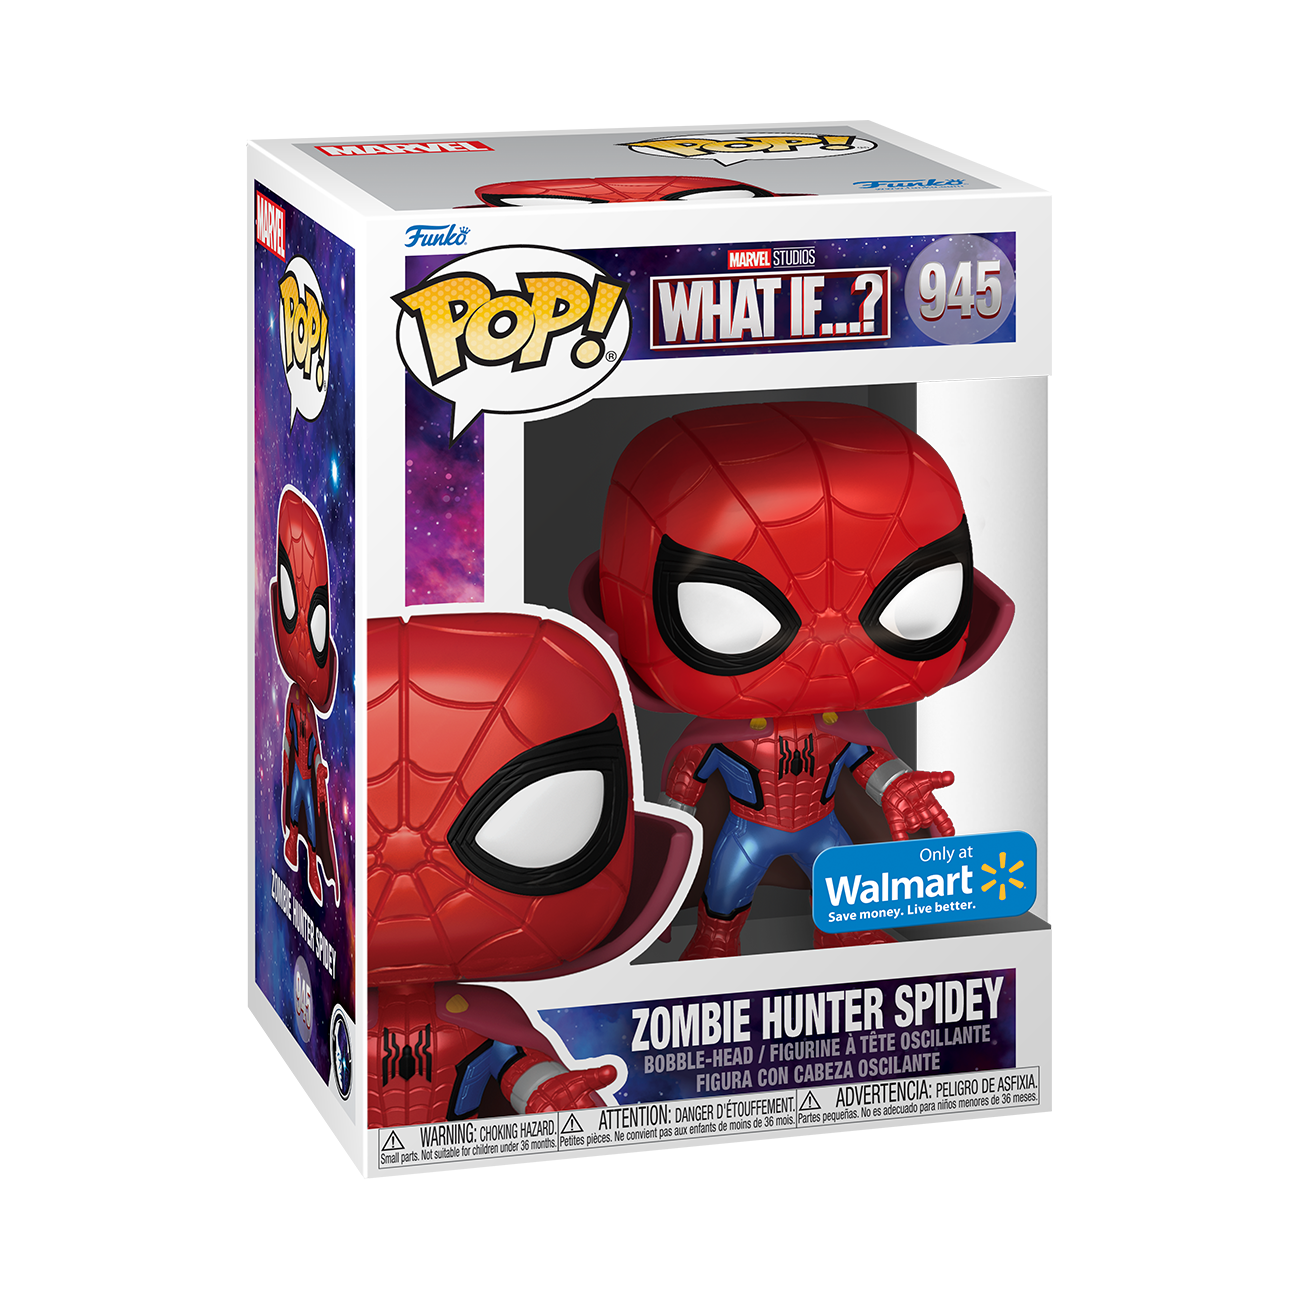 Funko POP! What If…? Spider-Man Zombie Hunter Spidey Pop Vinyl Collectible Toy Figure  - EXCLUSIVE - image 1 of 5